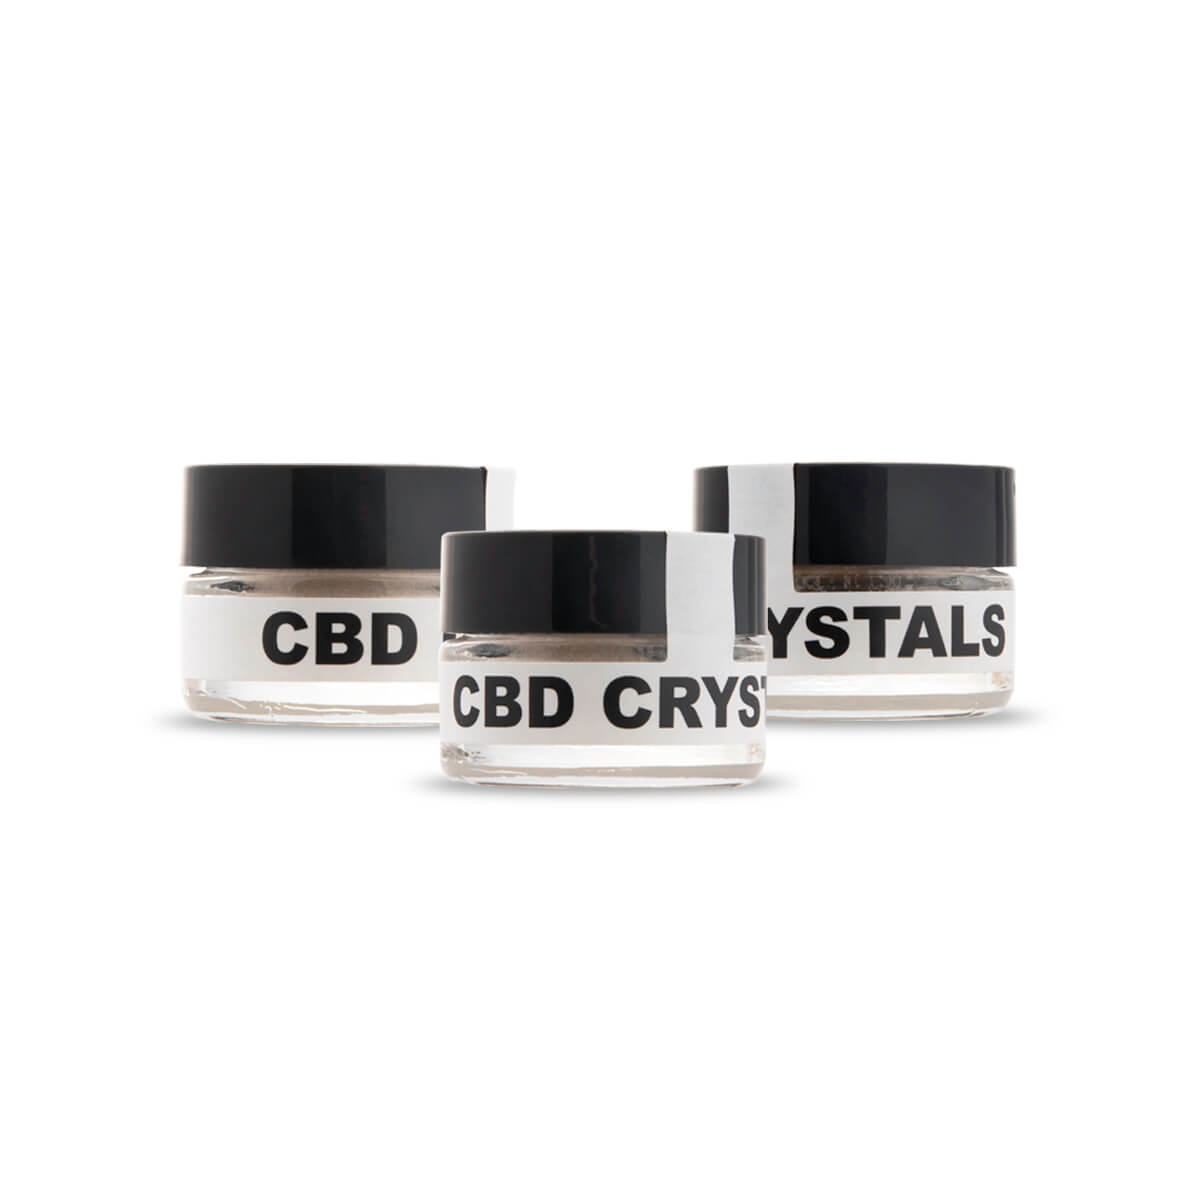 Endoca, CBD Crystal 99% Pure, 1g, 1000mg 1